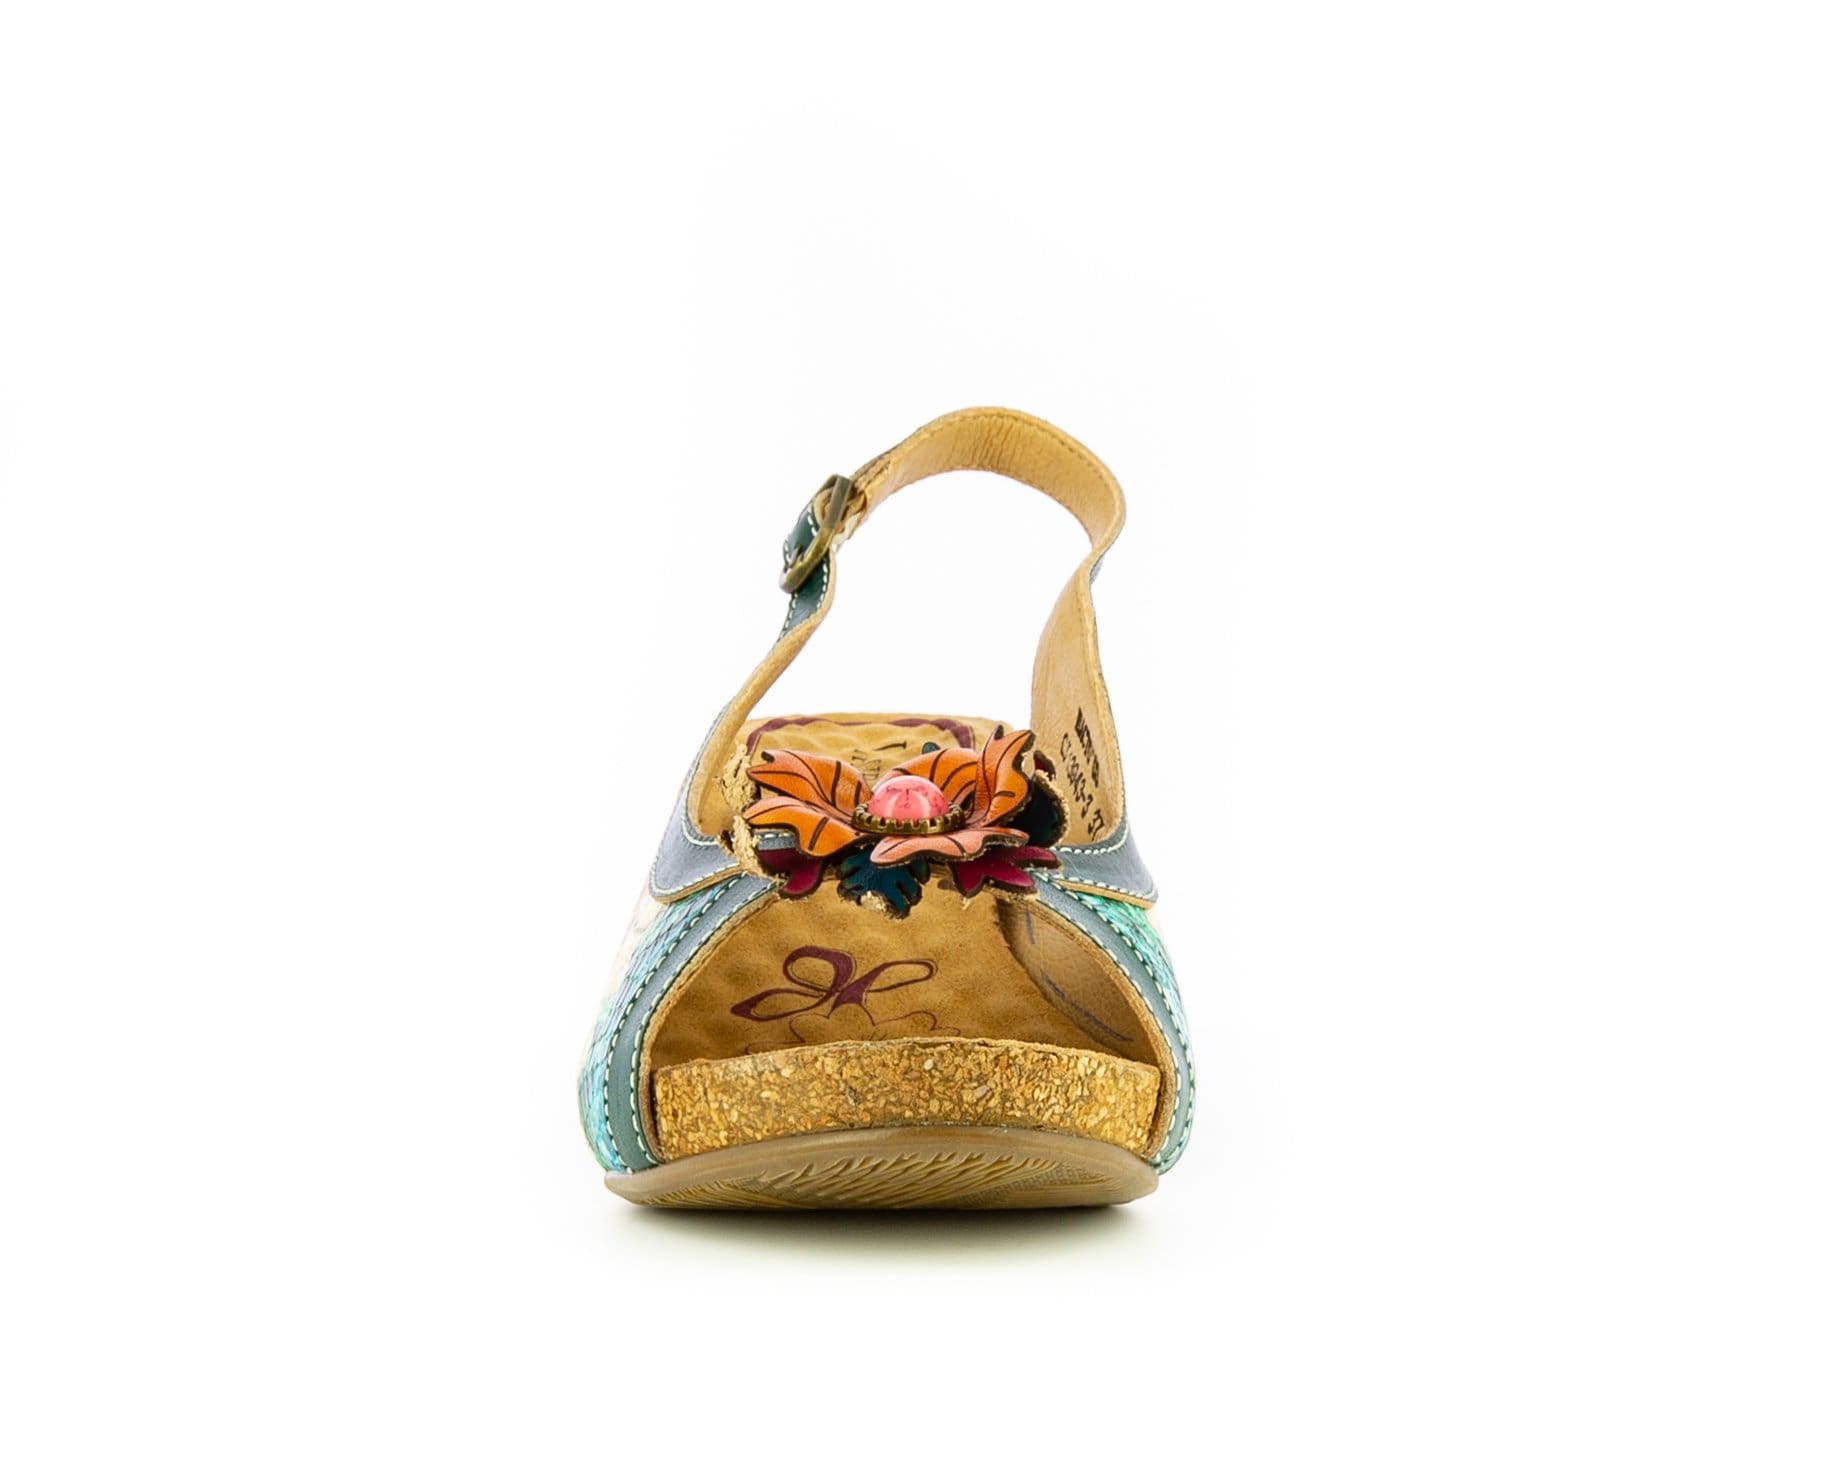 Chaussures HACTO 03 - Sandale